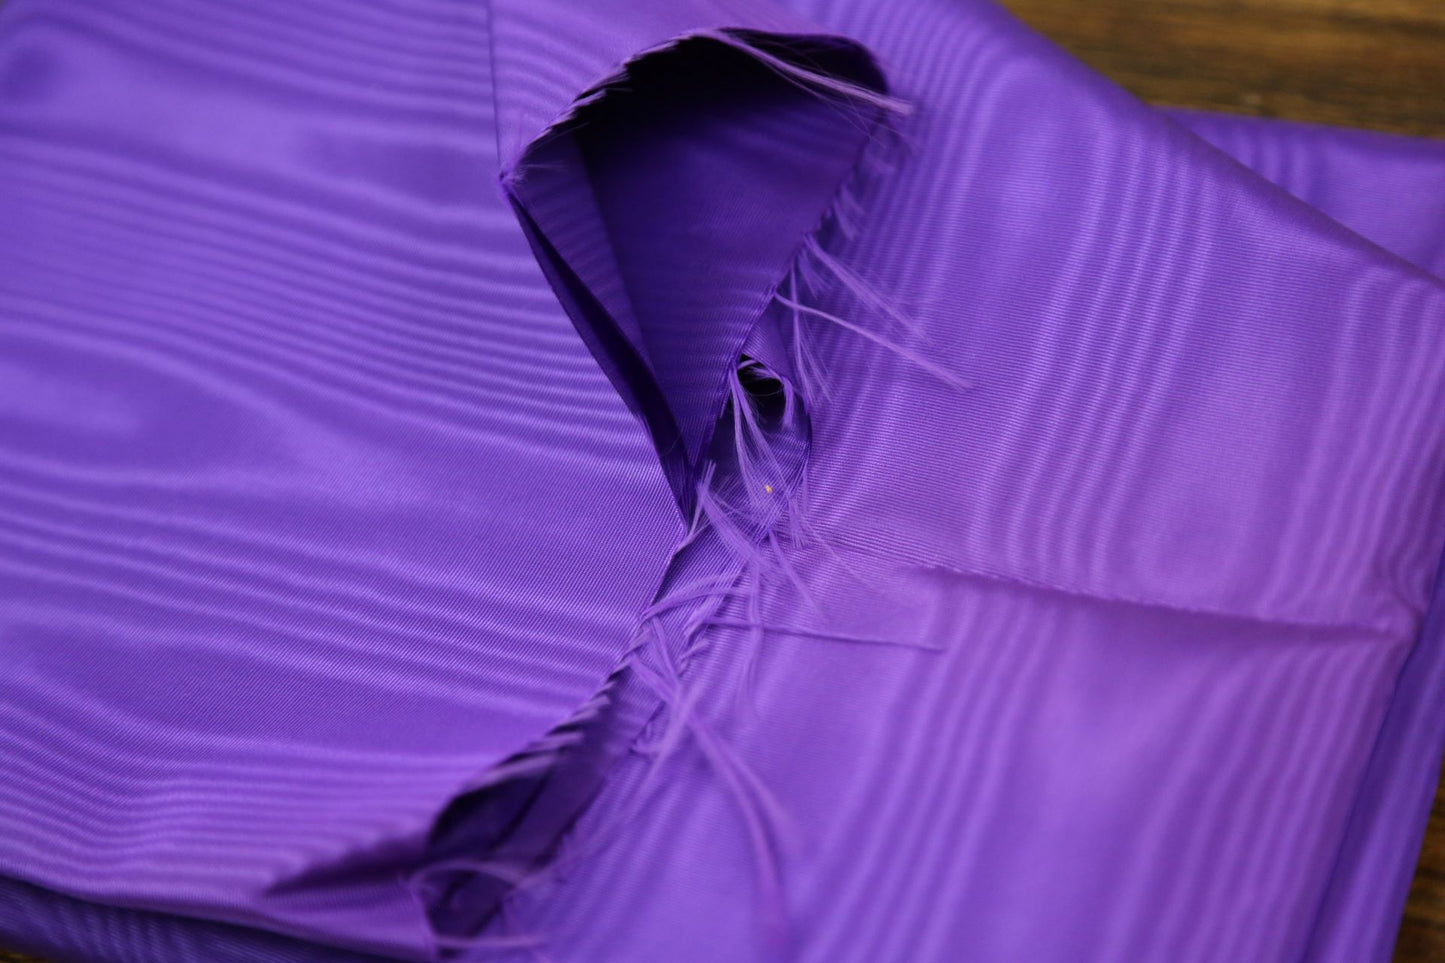 Purple Woodgrain Polyester